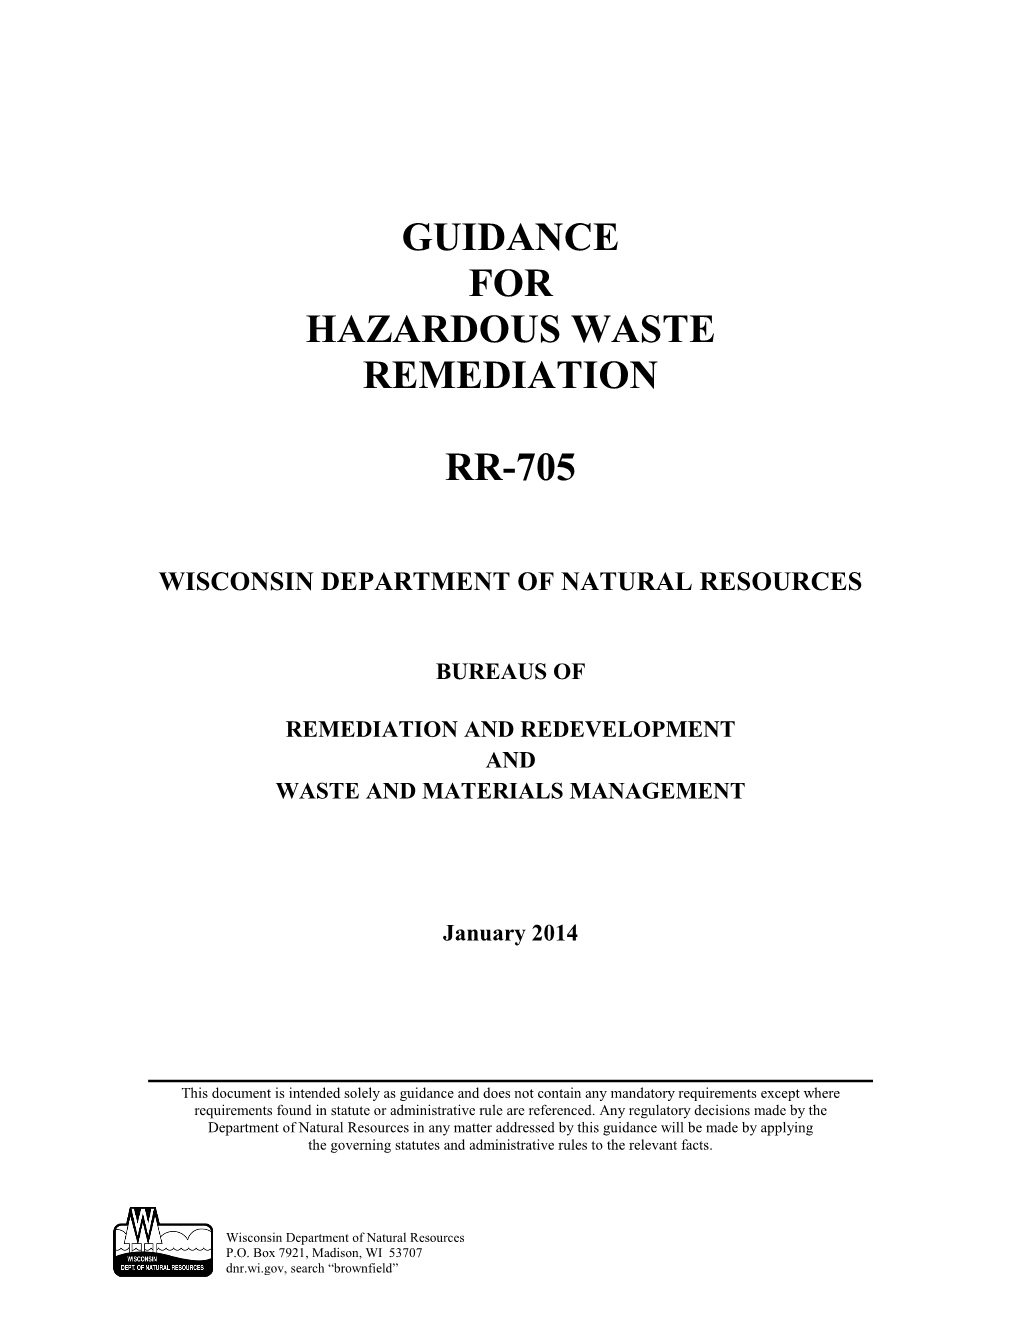 Guidance for Hazardous Waste Remediation